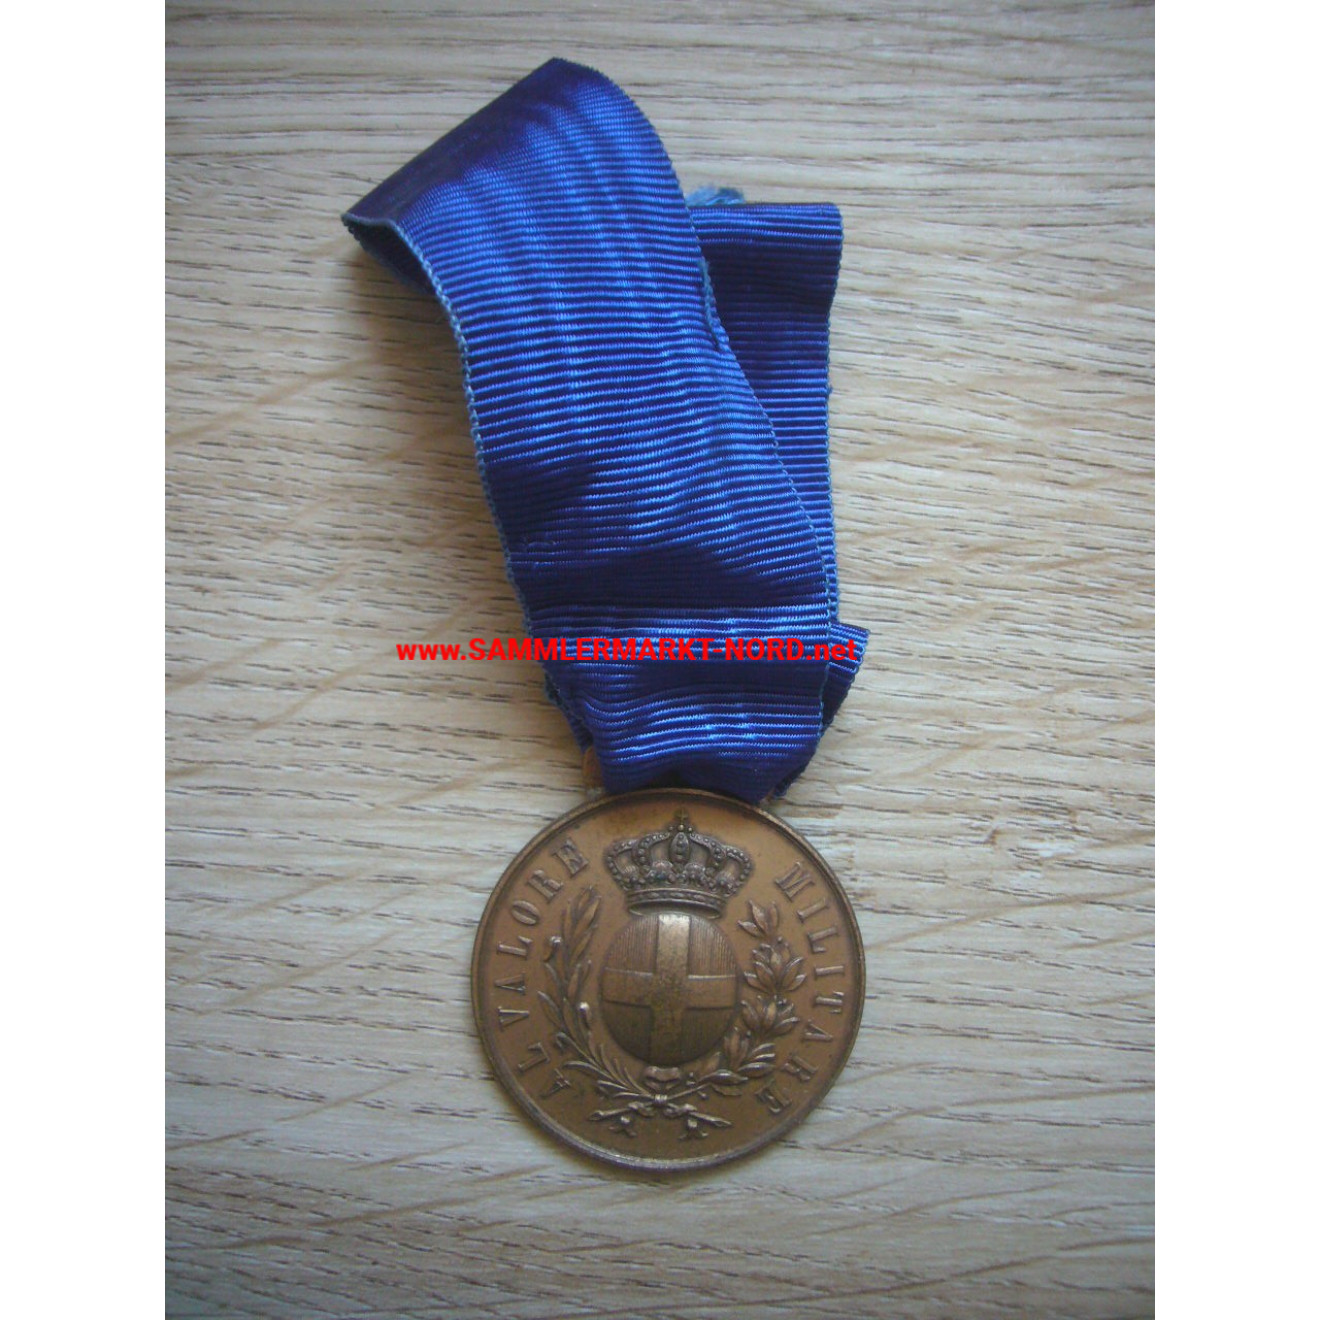 Italien - Tapferkeitsmedaille "Al Valore Militare" in Bronze